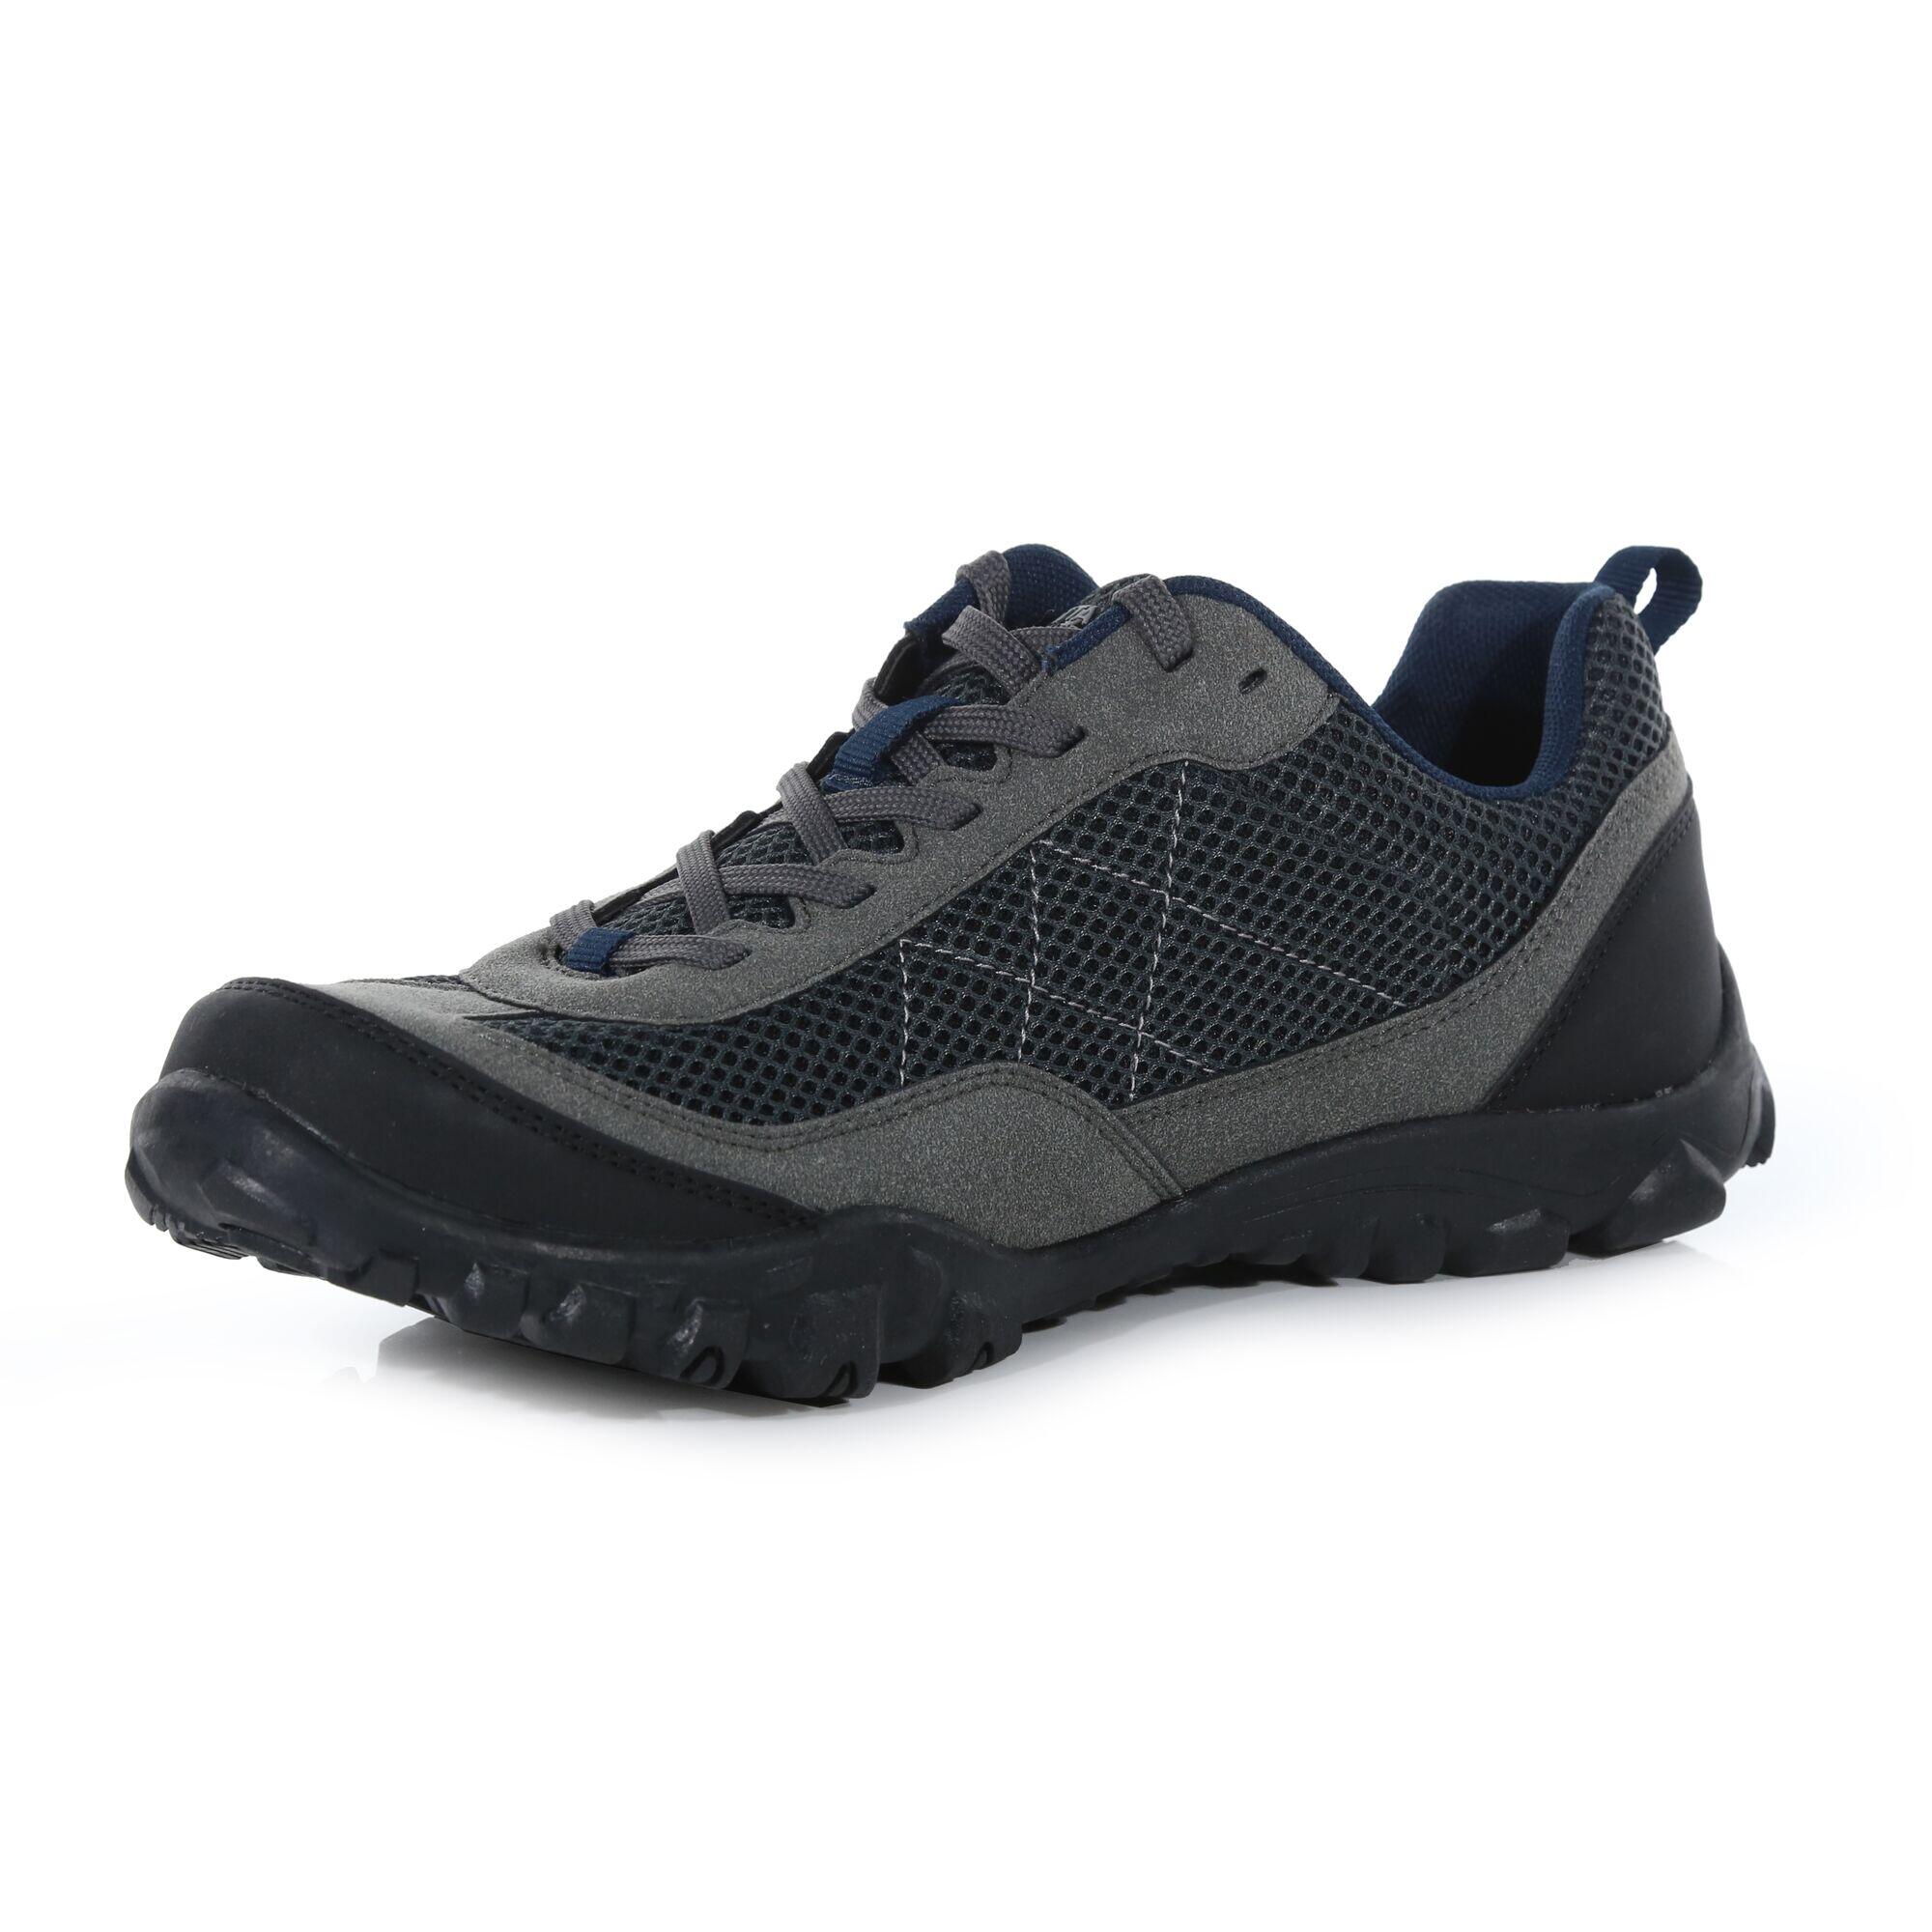 Edgepoint Life Men's Walking Shoes - Granite Grey 4/6